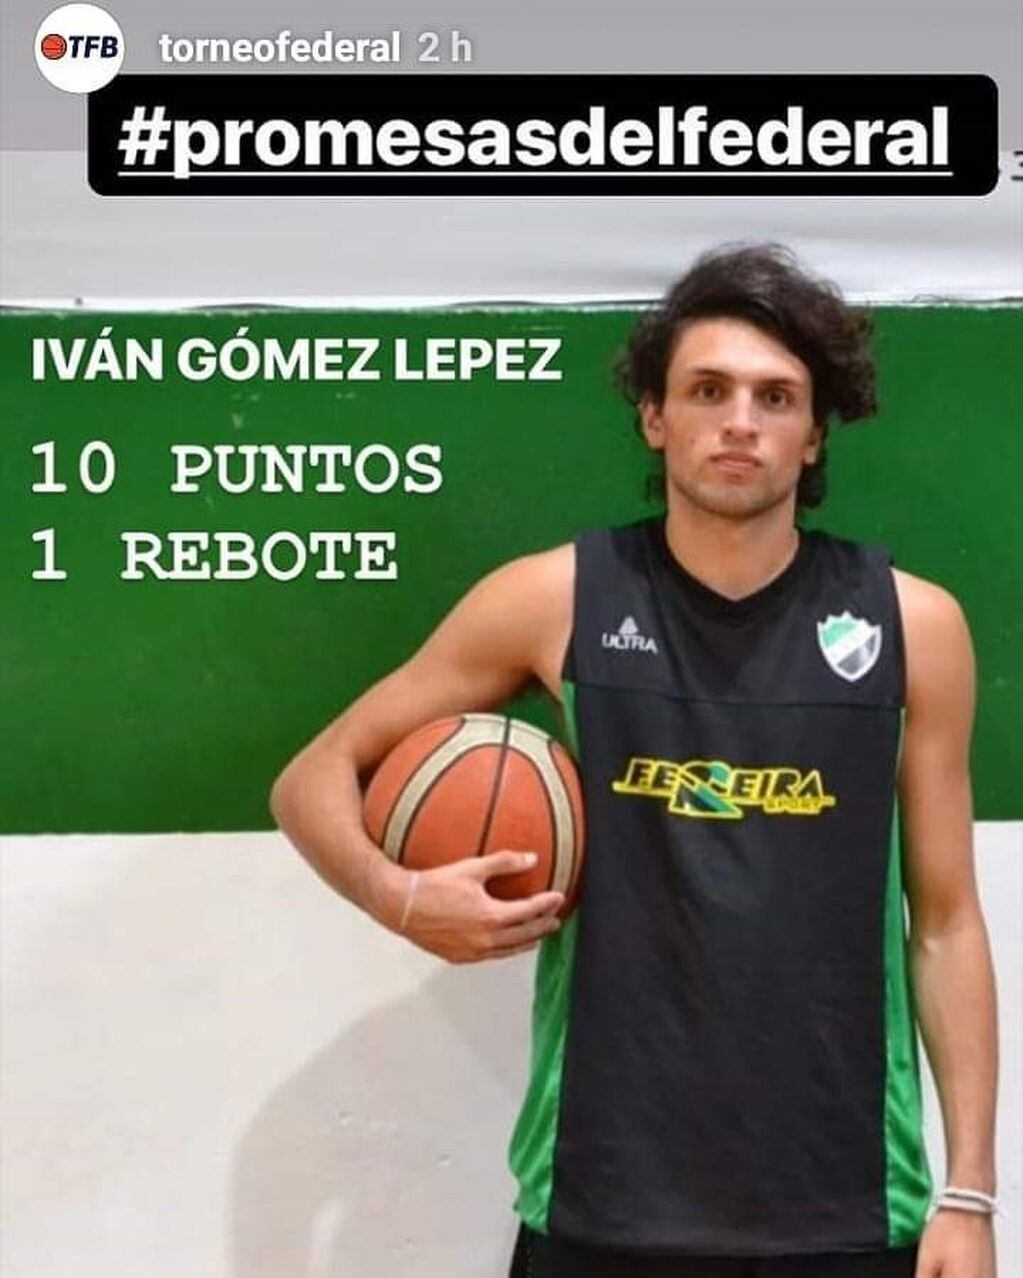 Iván Gómez Lepez promesa del Federal